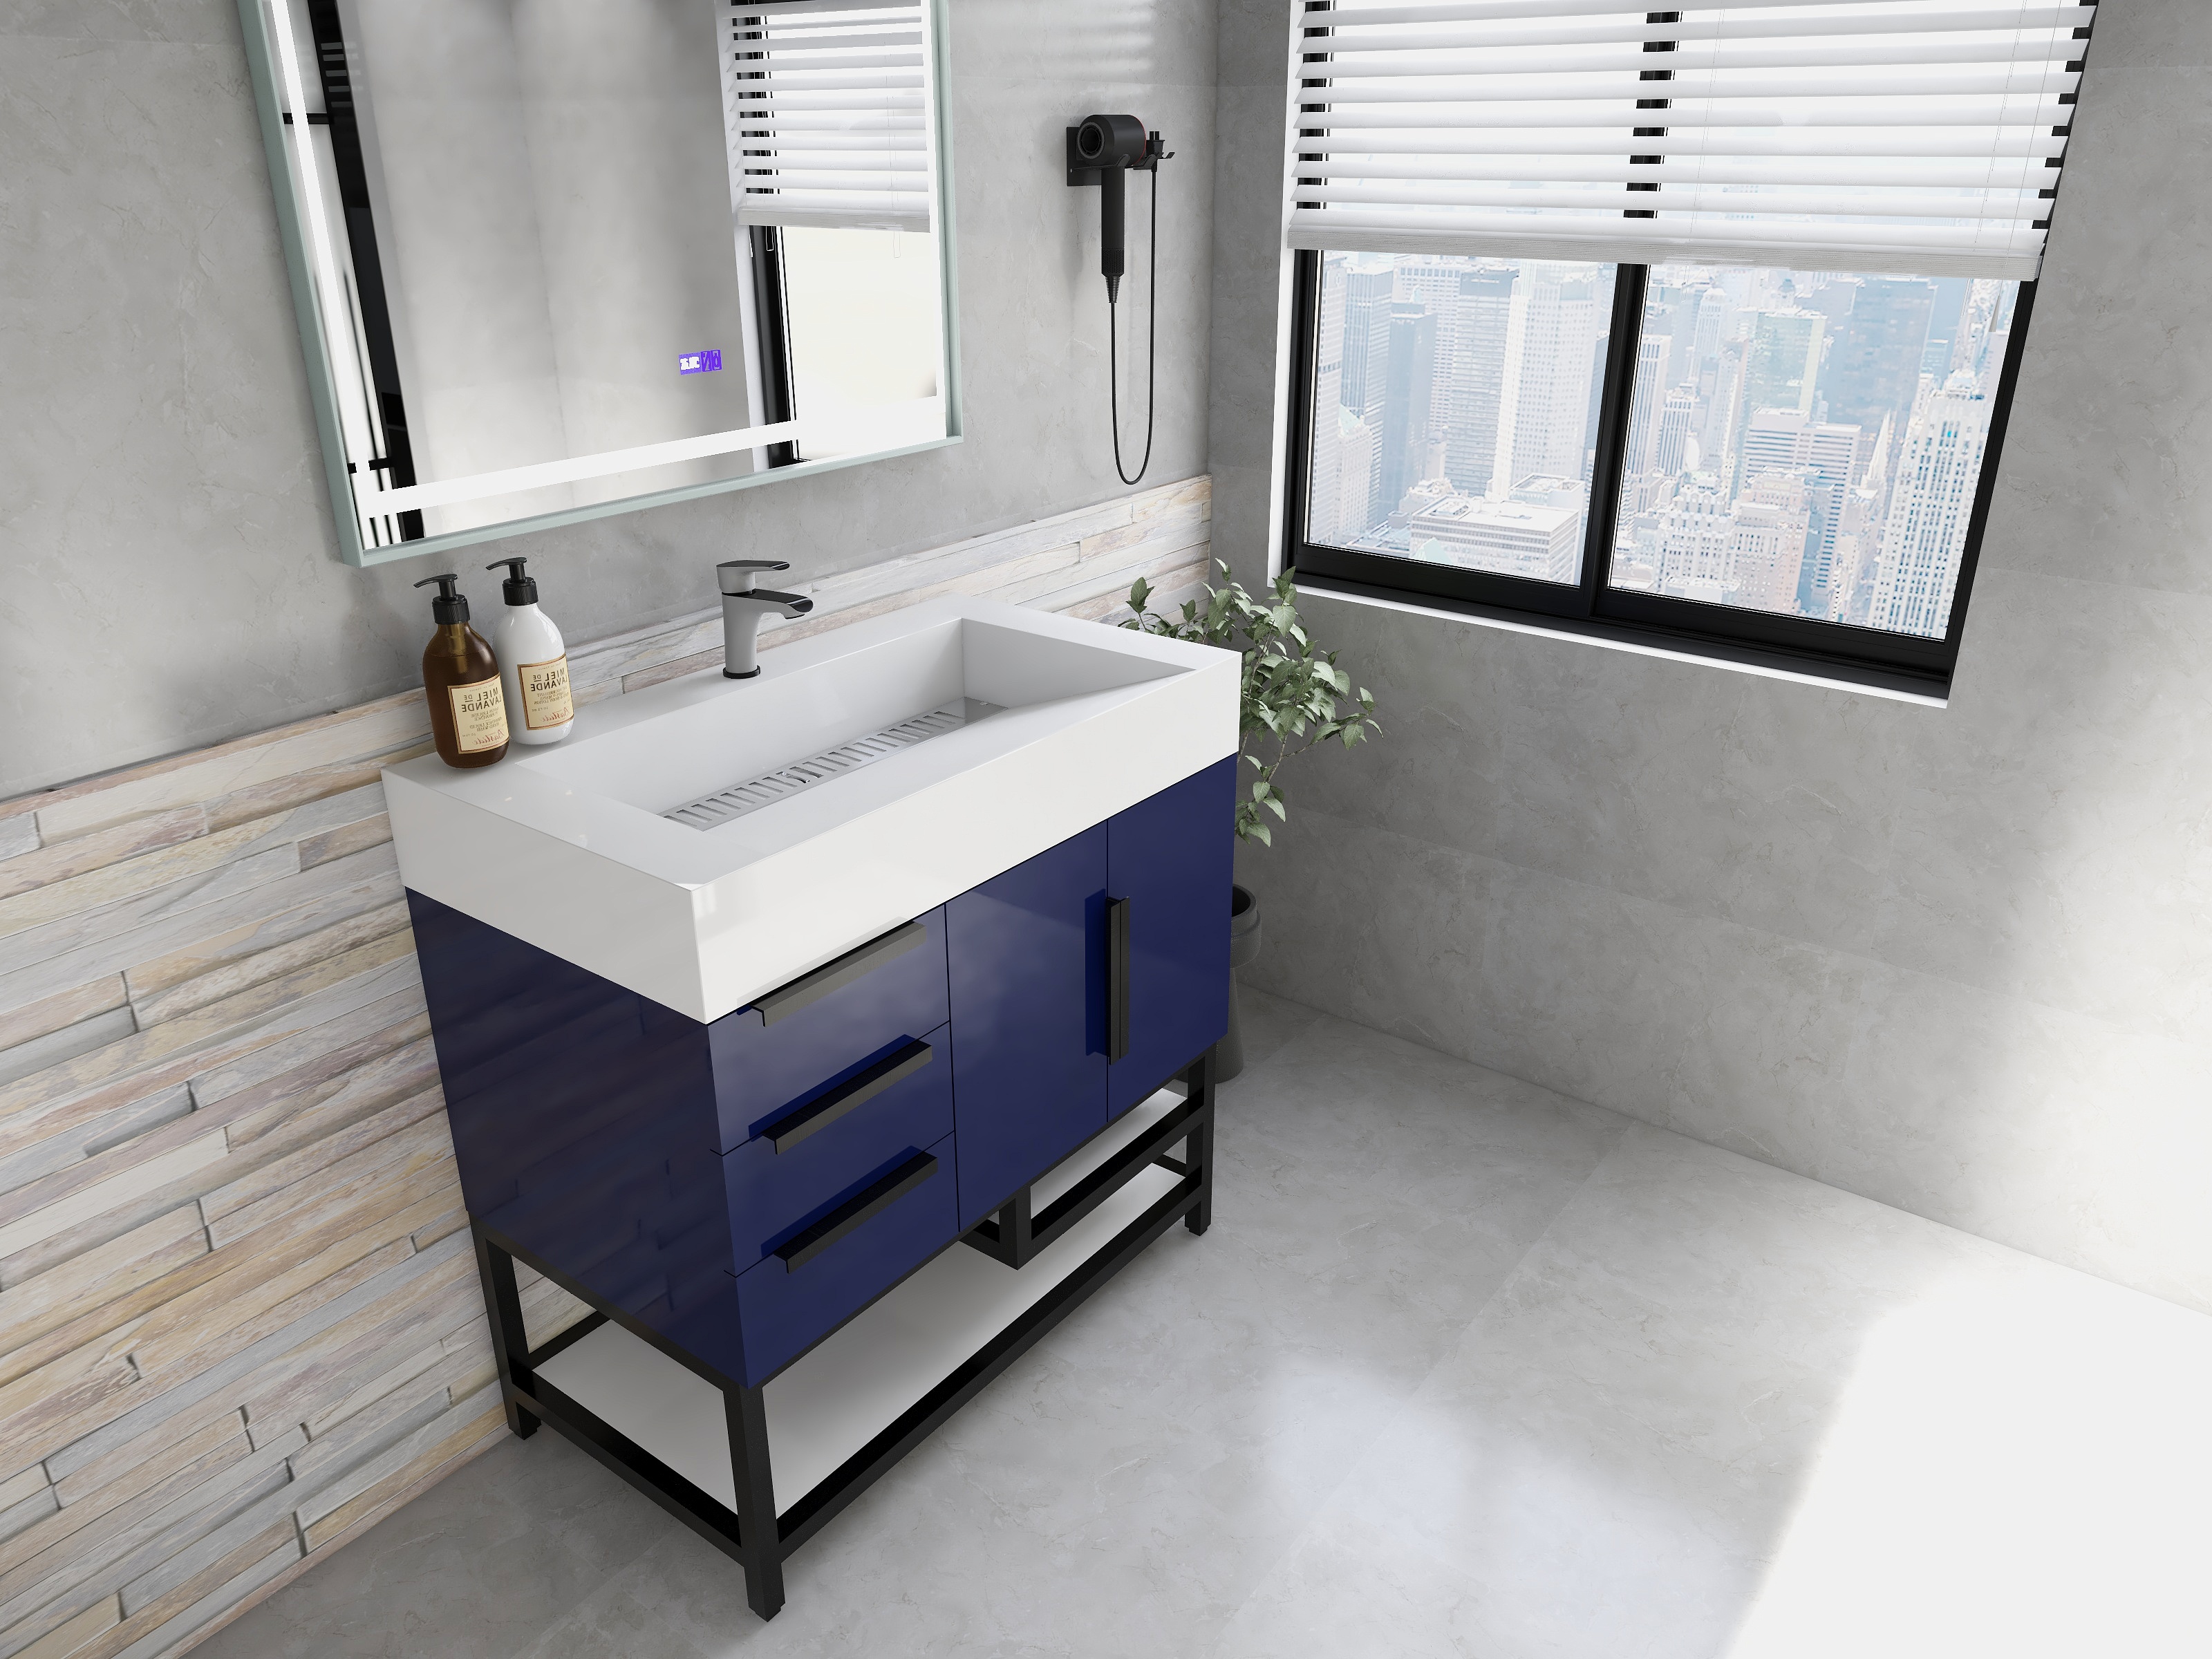 Bethany 36" Freestanding Bathroom Vanity with Reinforced Acrylic Sink in Night Blue Gloss with Black Handles | Better Vanity Bath Vanities